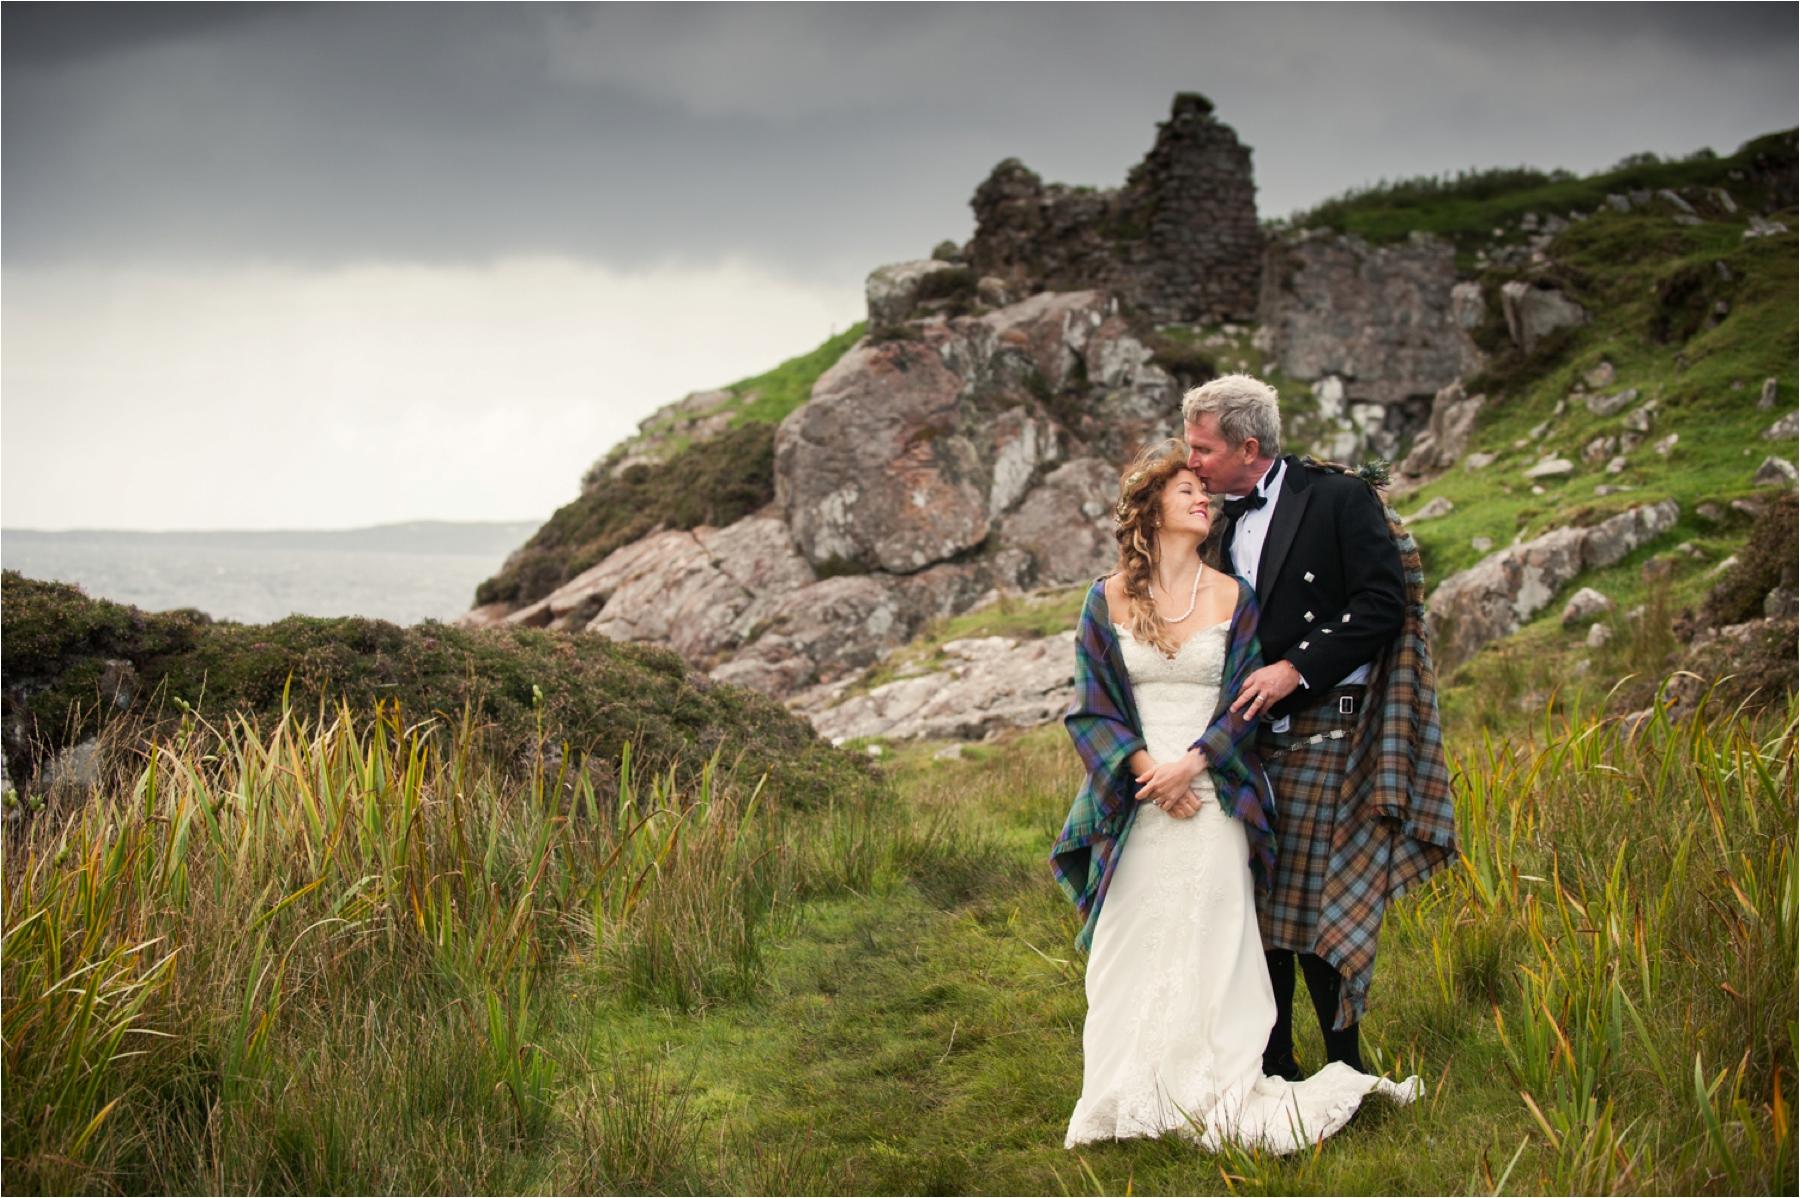 Jessica & Brad’s wedding on the Isle of Skye